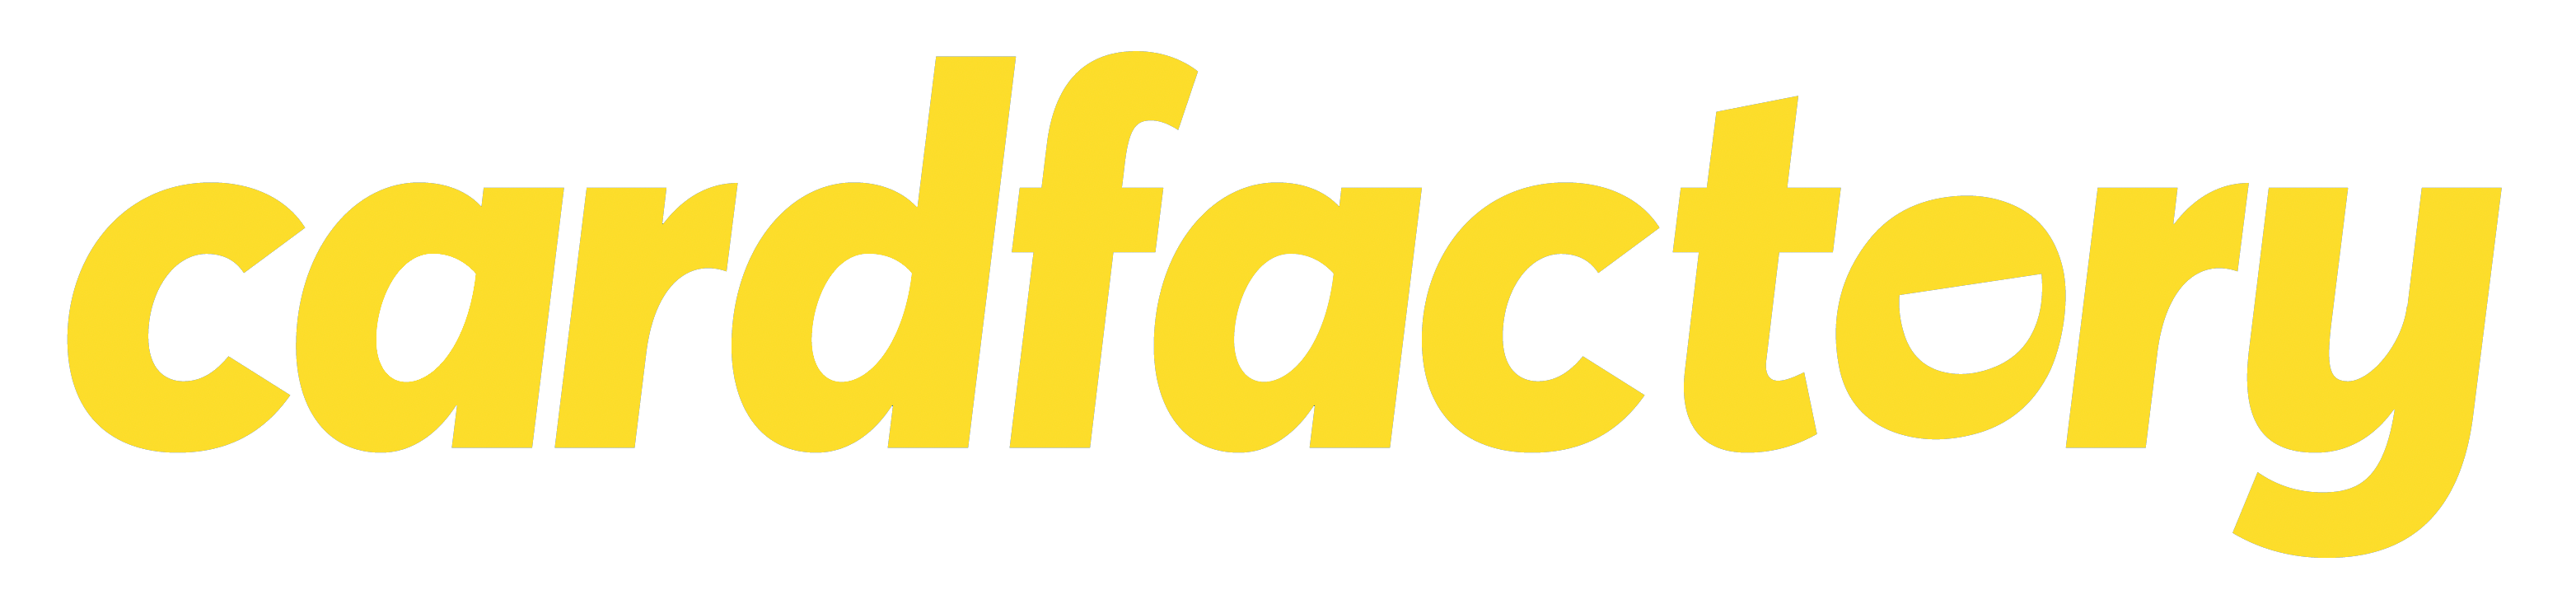 Card Factory logo